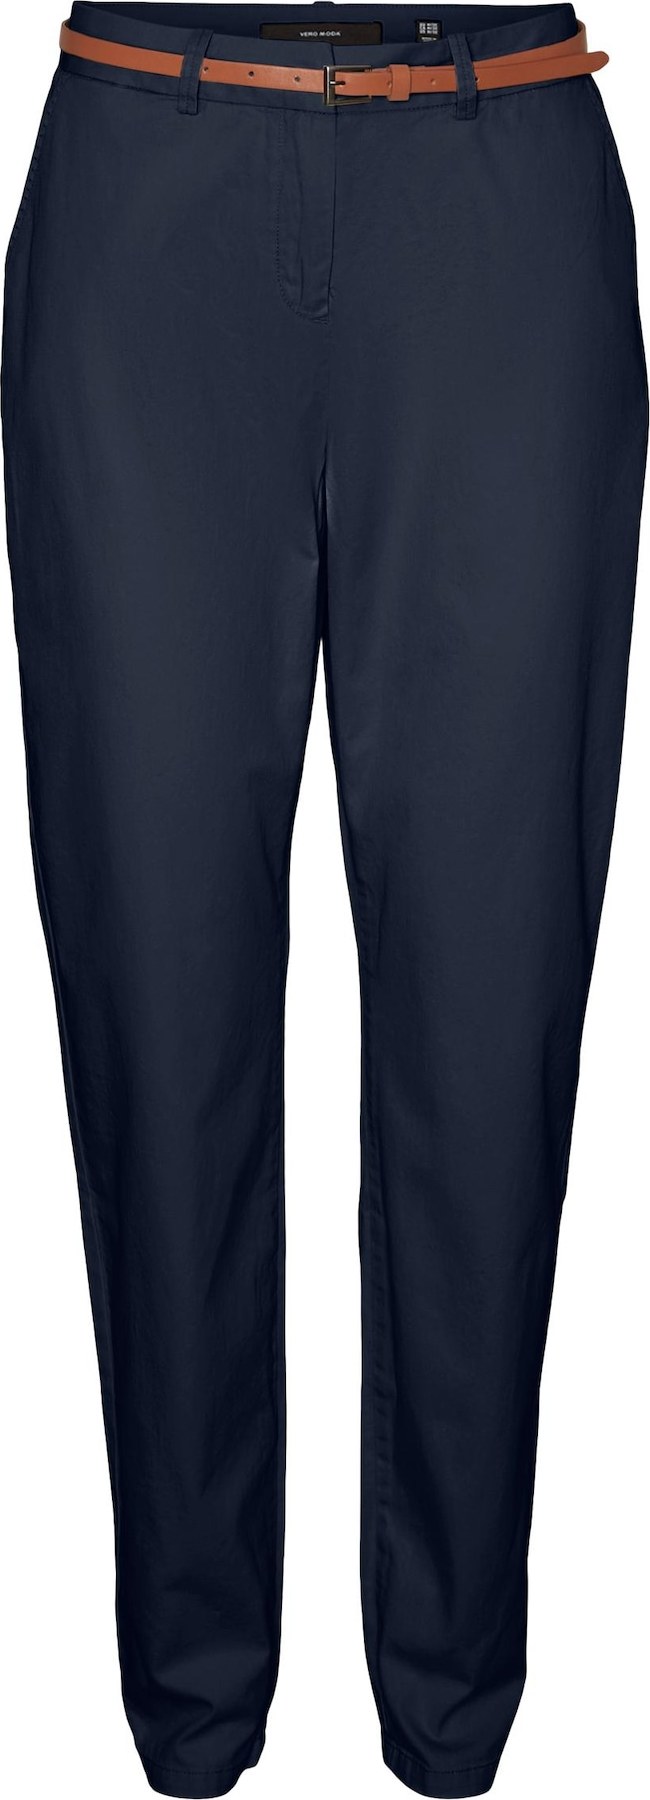 VERO MODA Chino kalhoty 'FLASHINO' námořnická modř